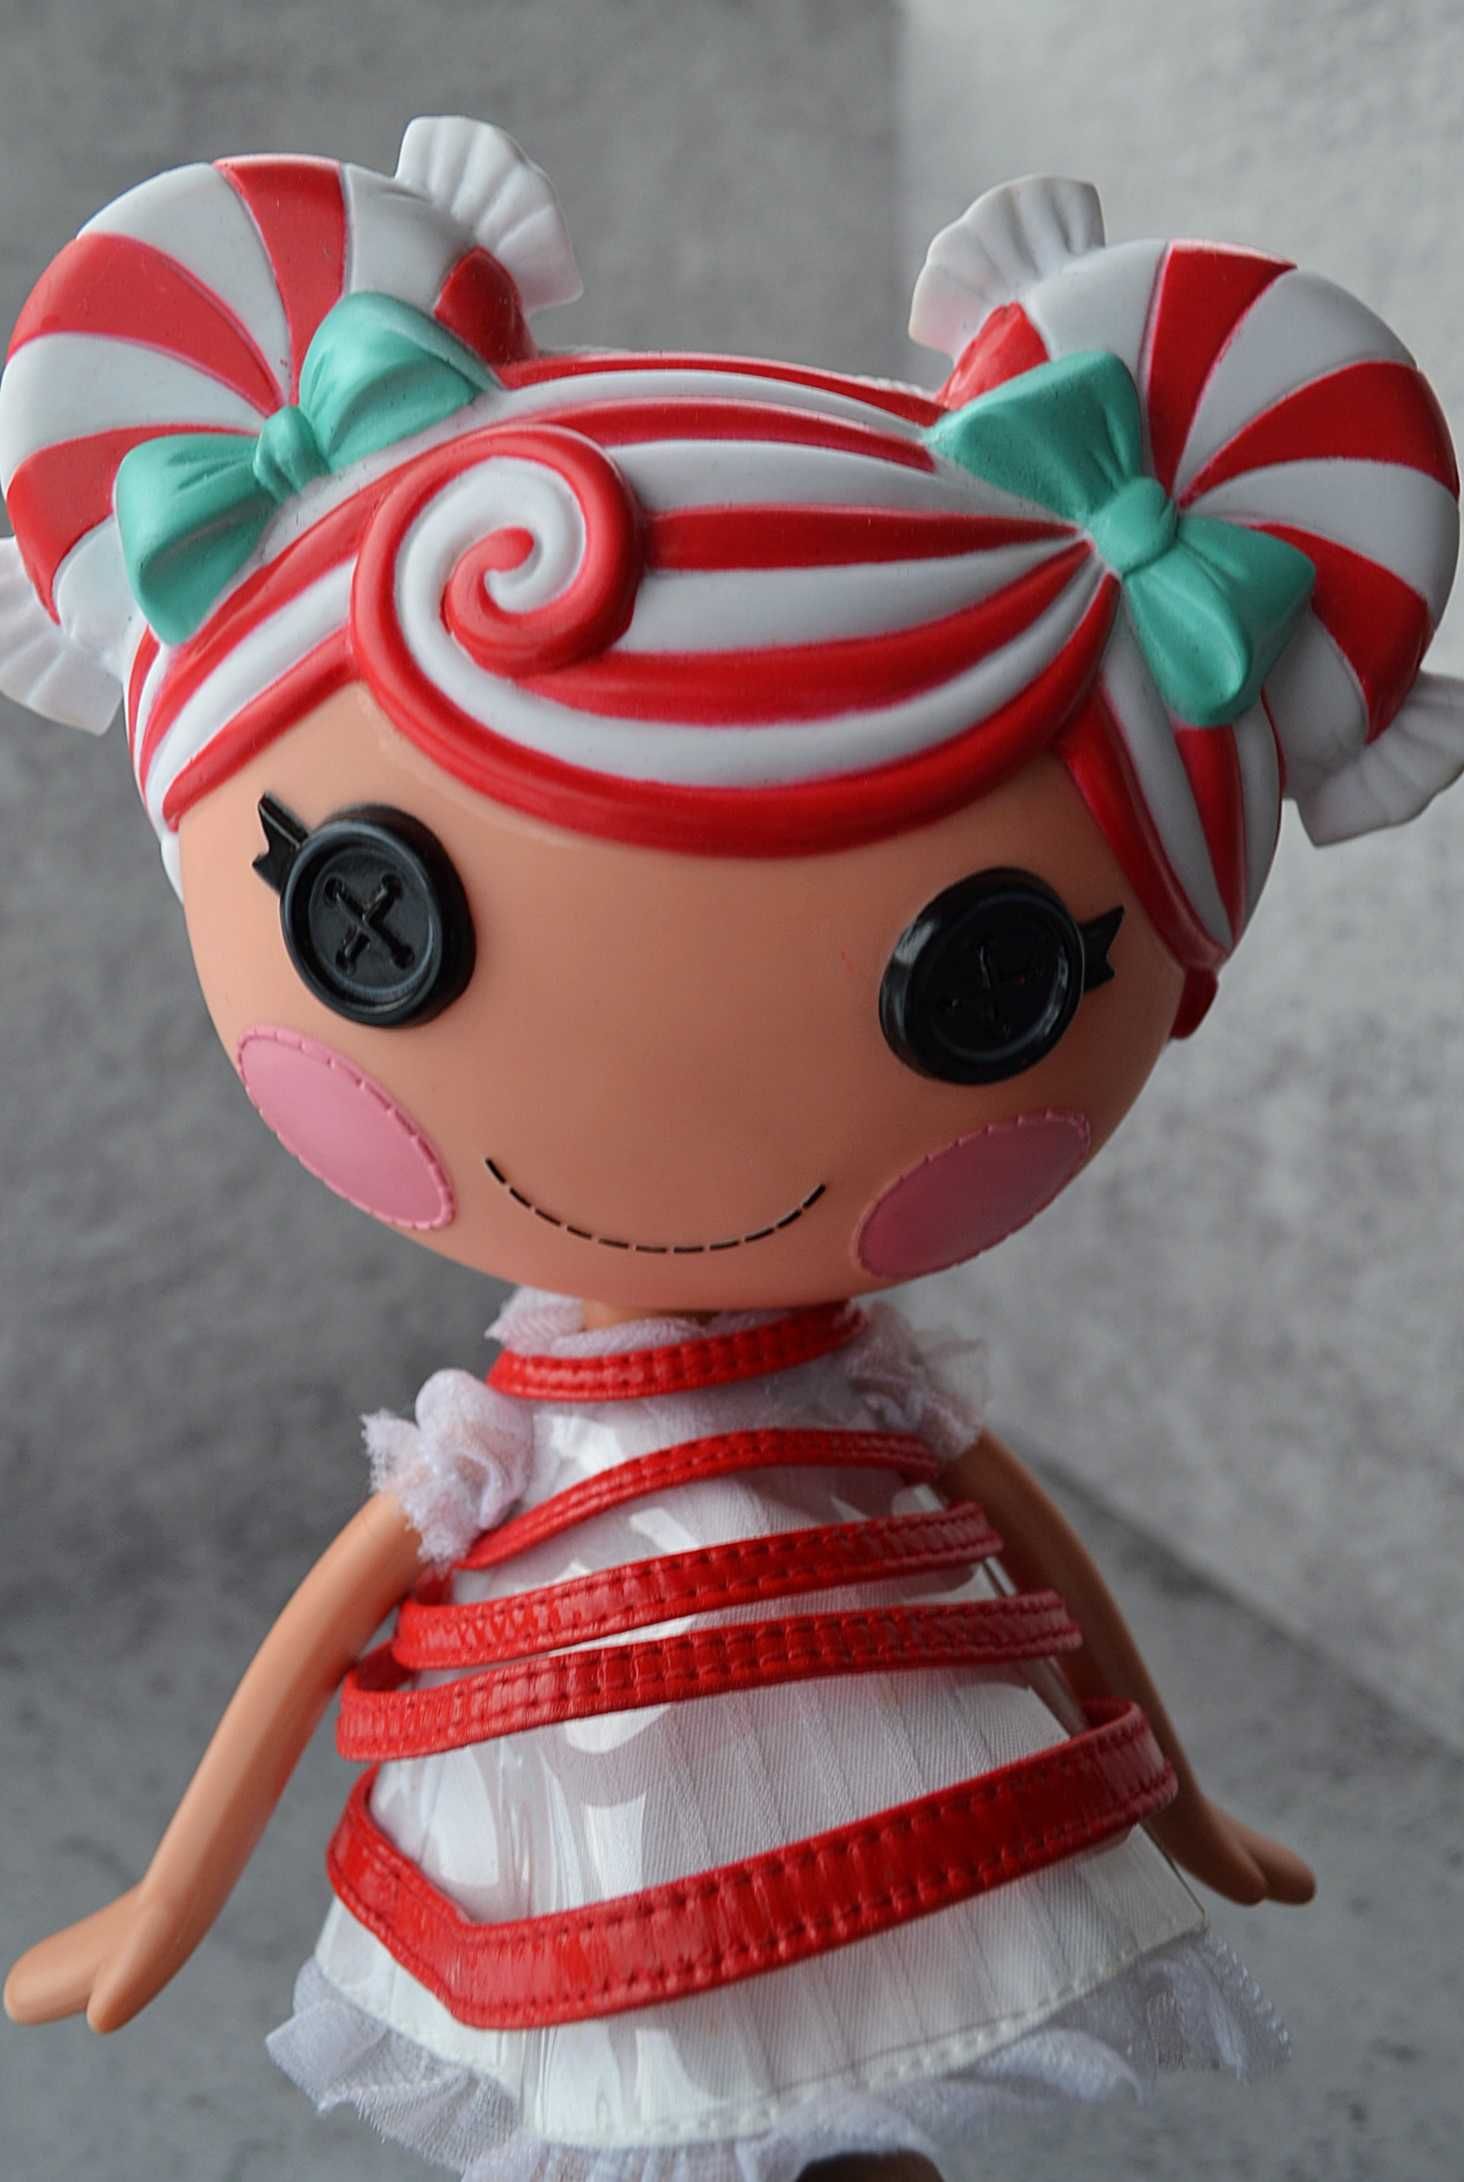 Кукла оригинал Лалалупси от MGA фирменная кукла - конфетка